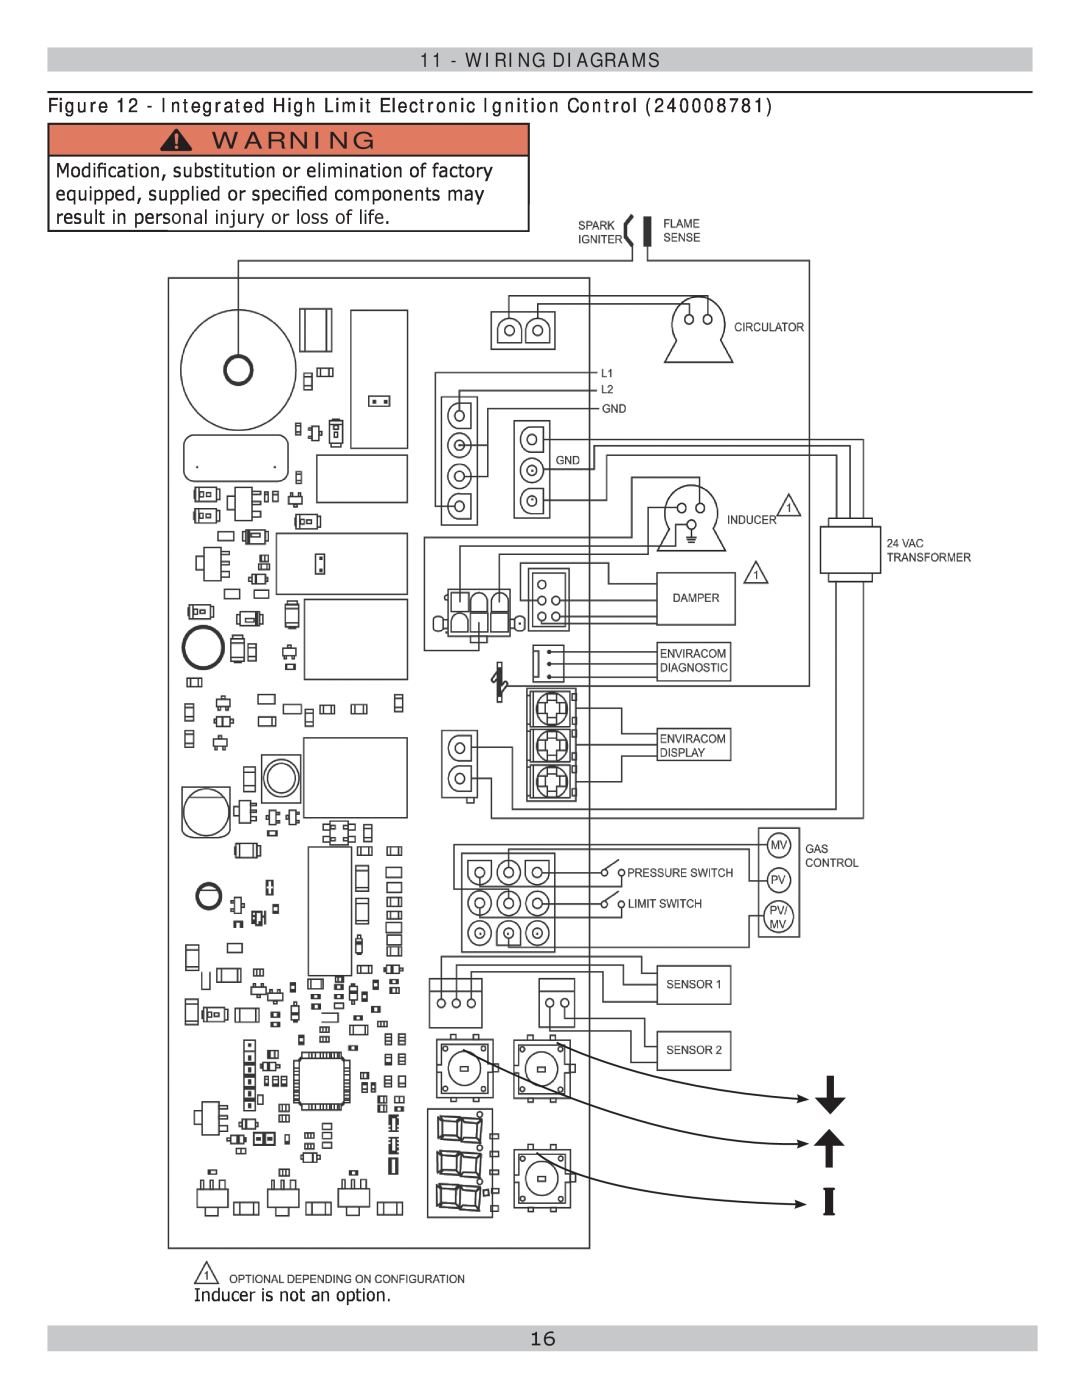 Lennox International Inc GWB8-280E-2, GWB8-262E-2 Wiring Diagrams, Integrated High Limit Electronic Ignition Control 